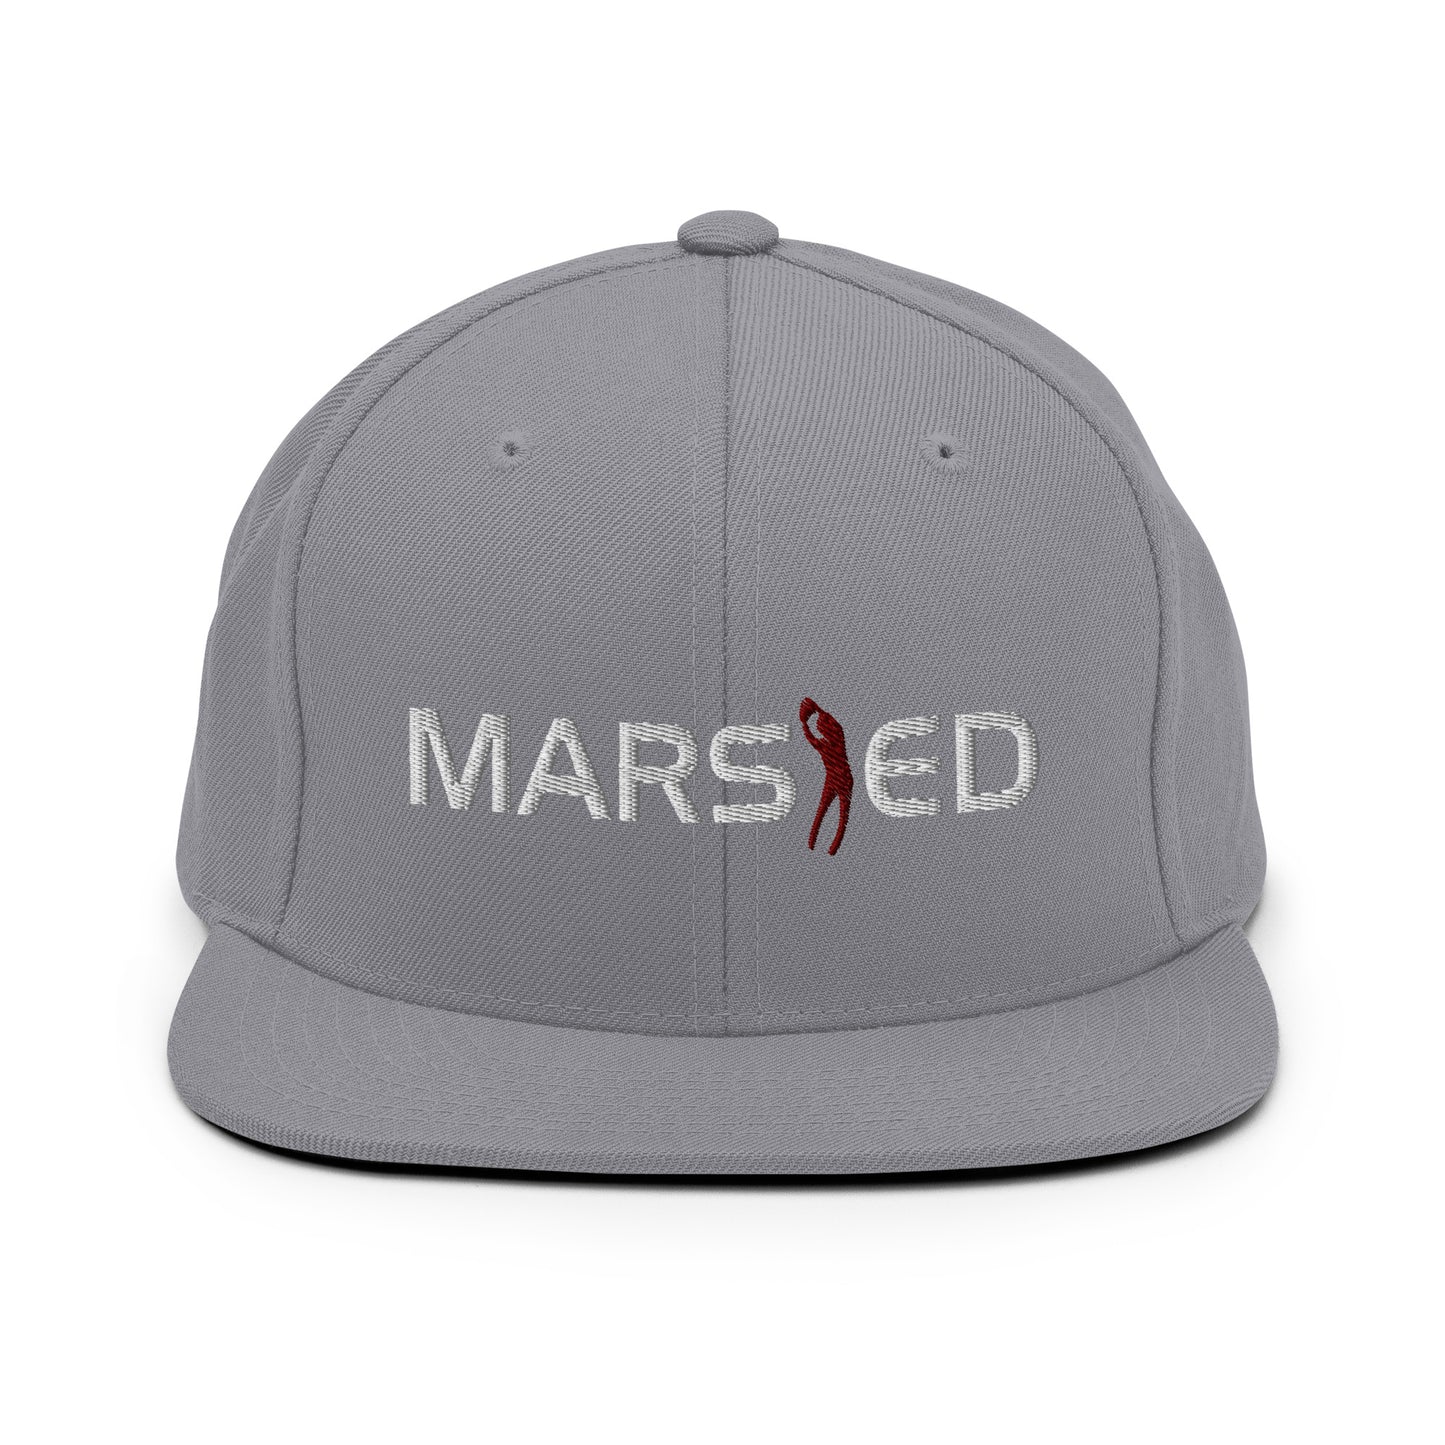 MARSHED SNAPBACK HAT